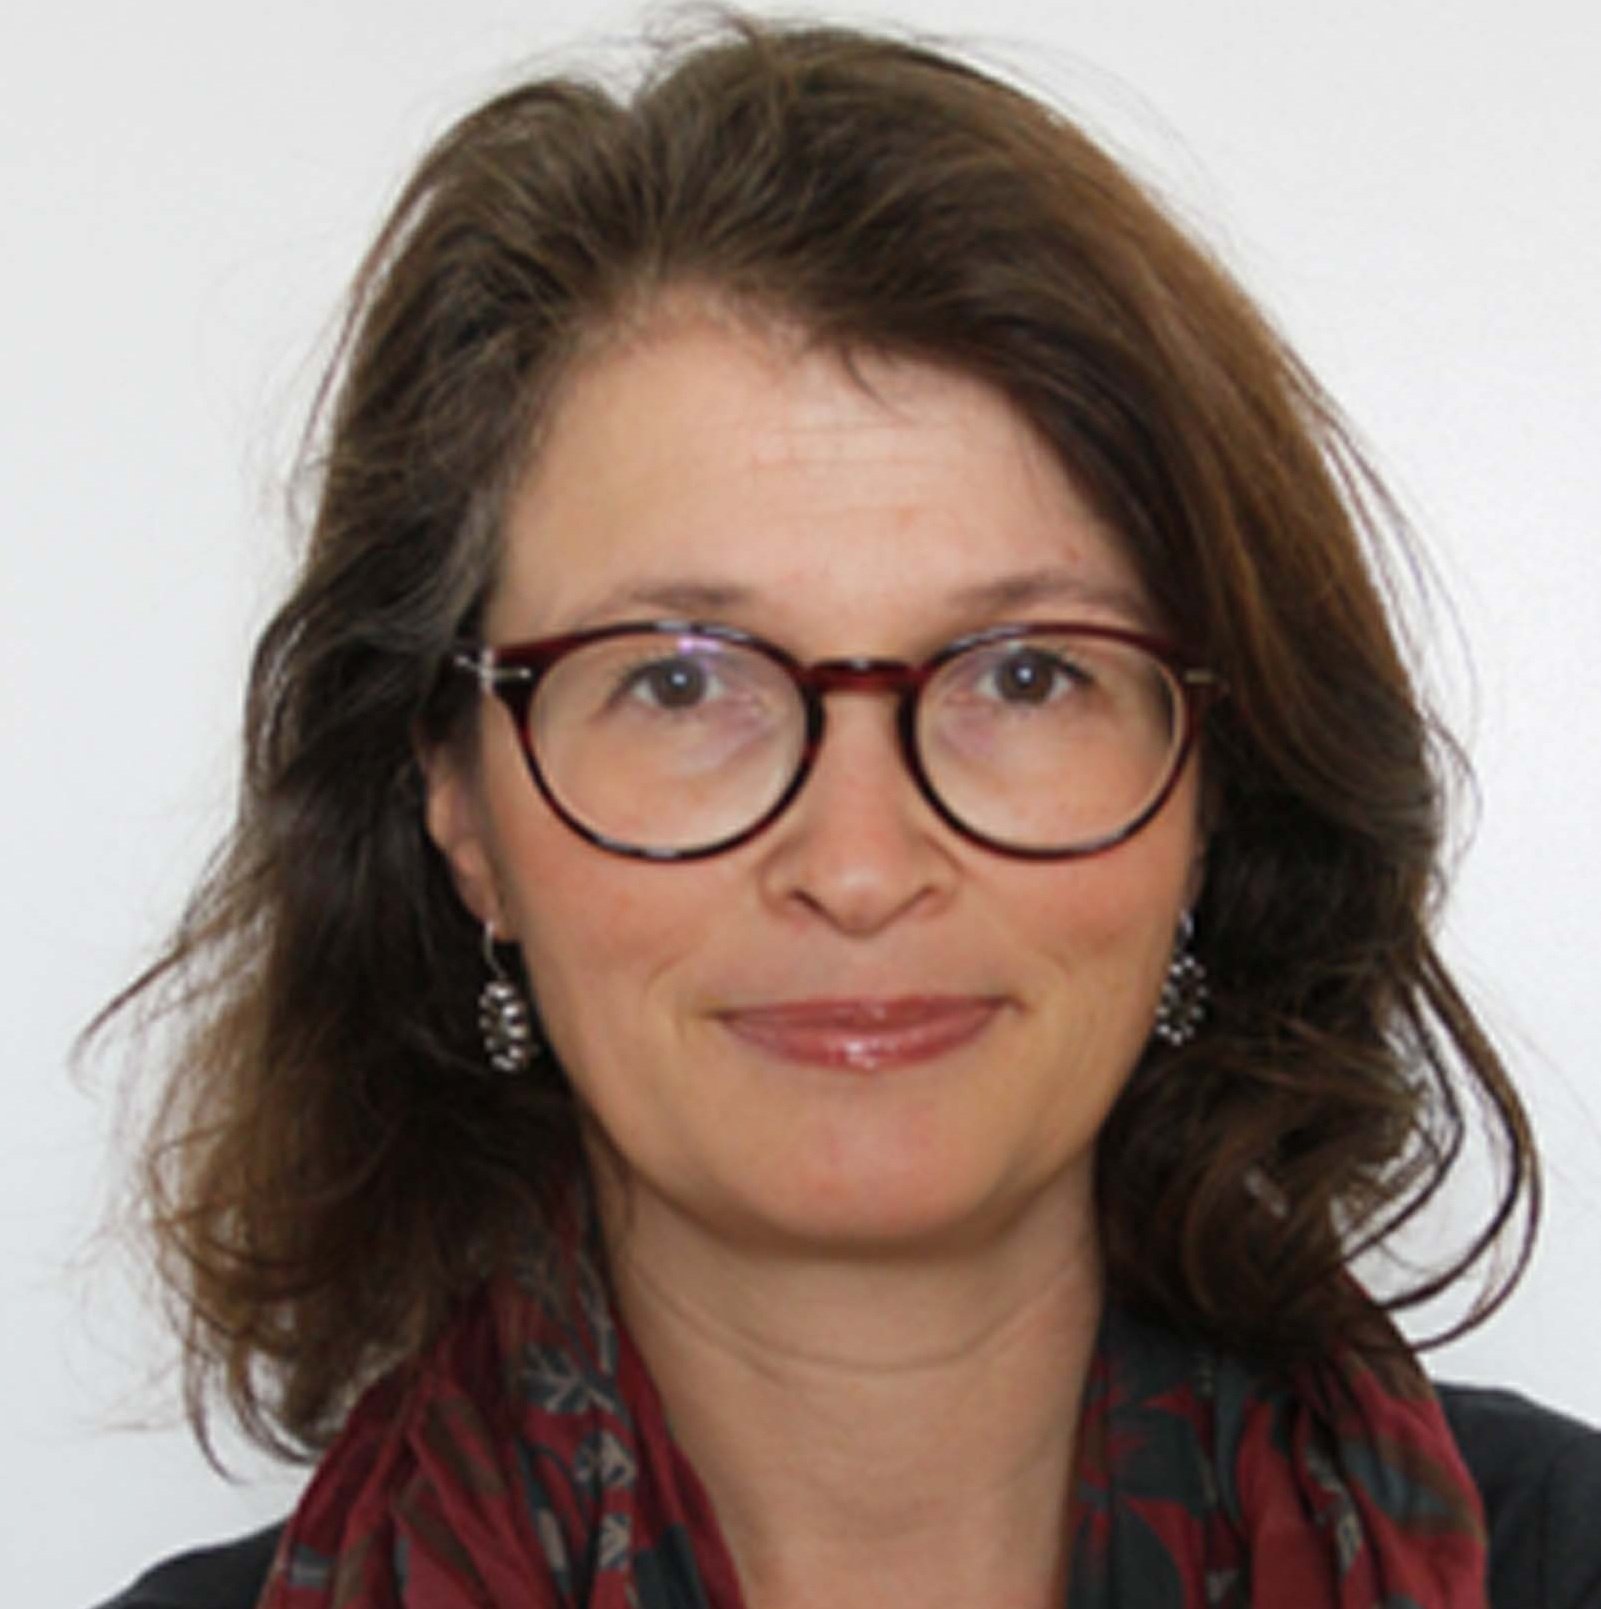 Agata Cieszewska, Warsaw University of Life Sciences